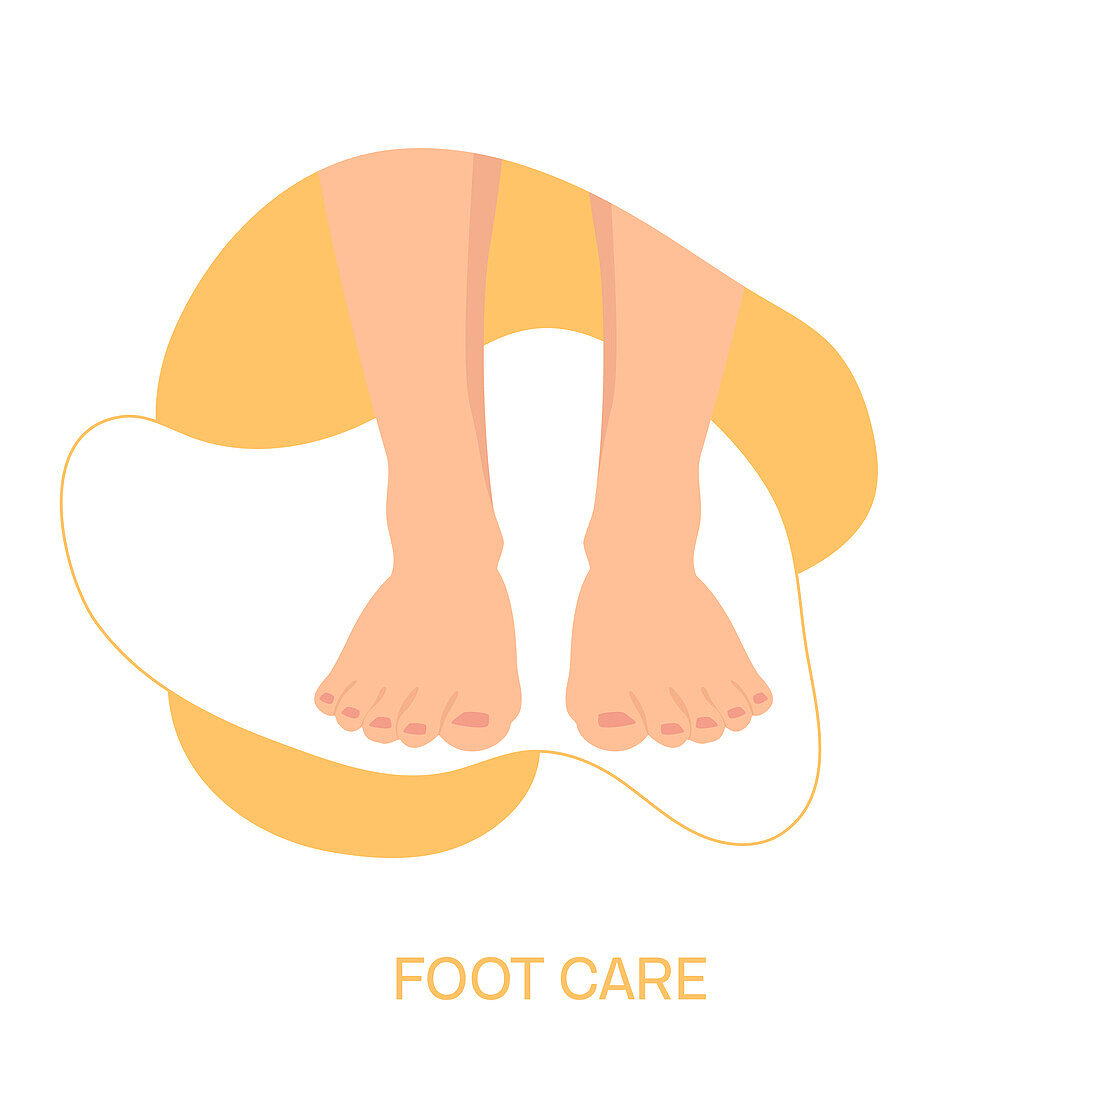 Foot care, conceptual illustration